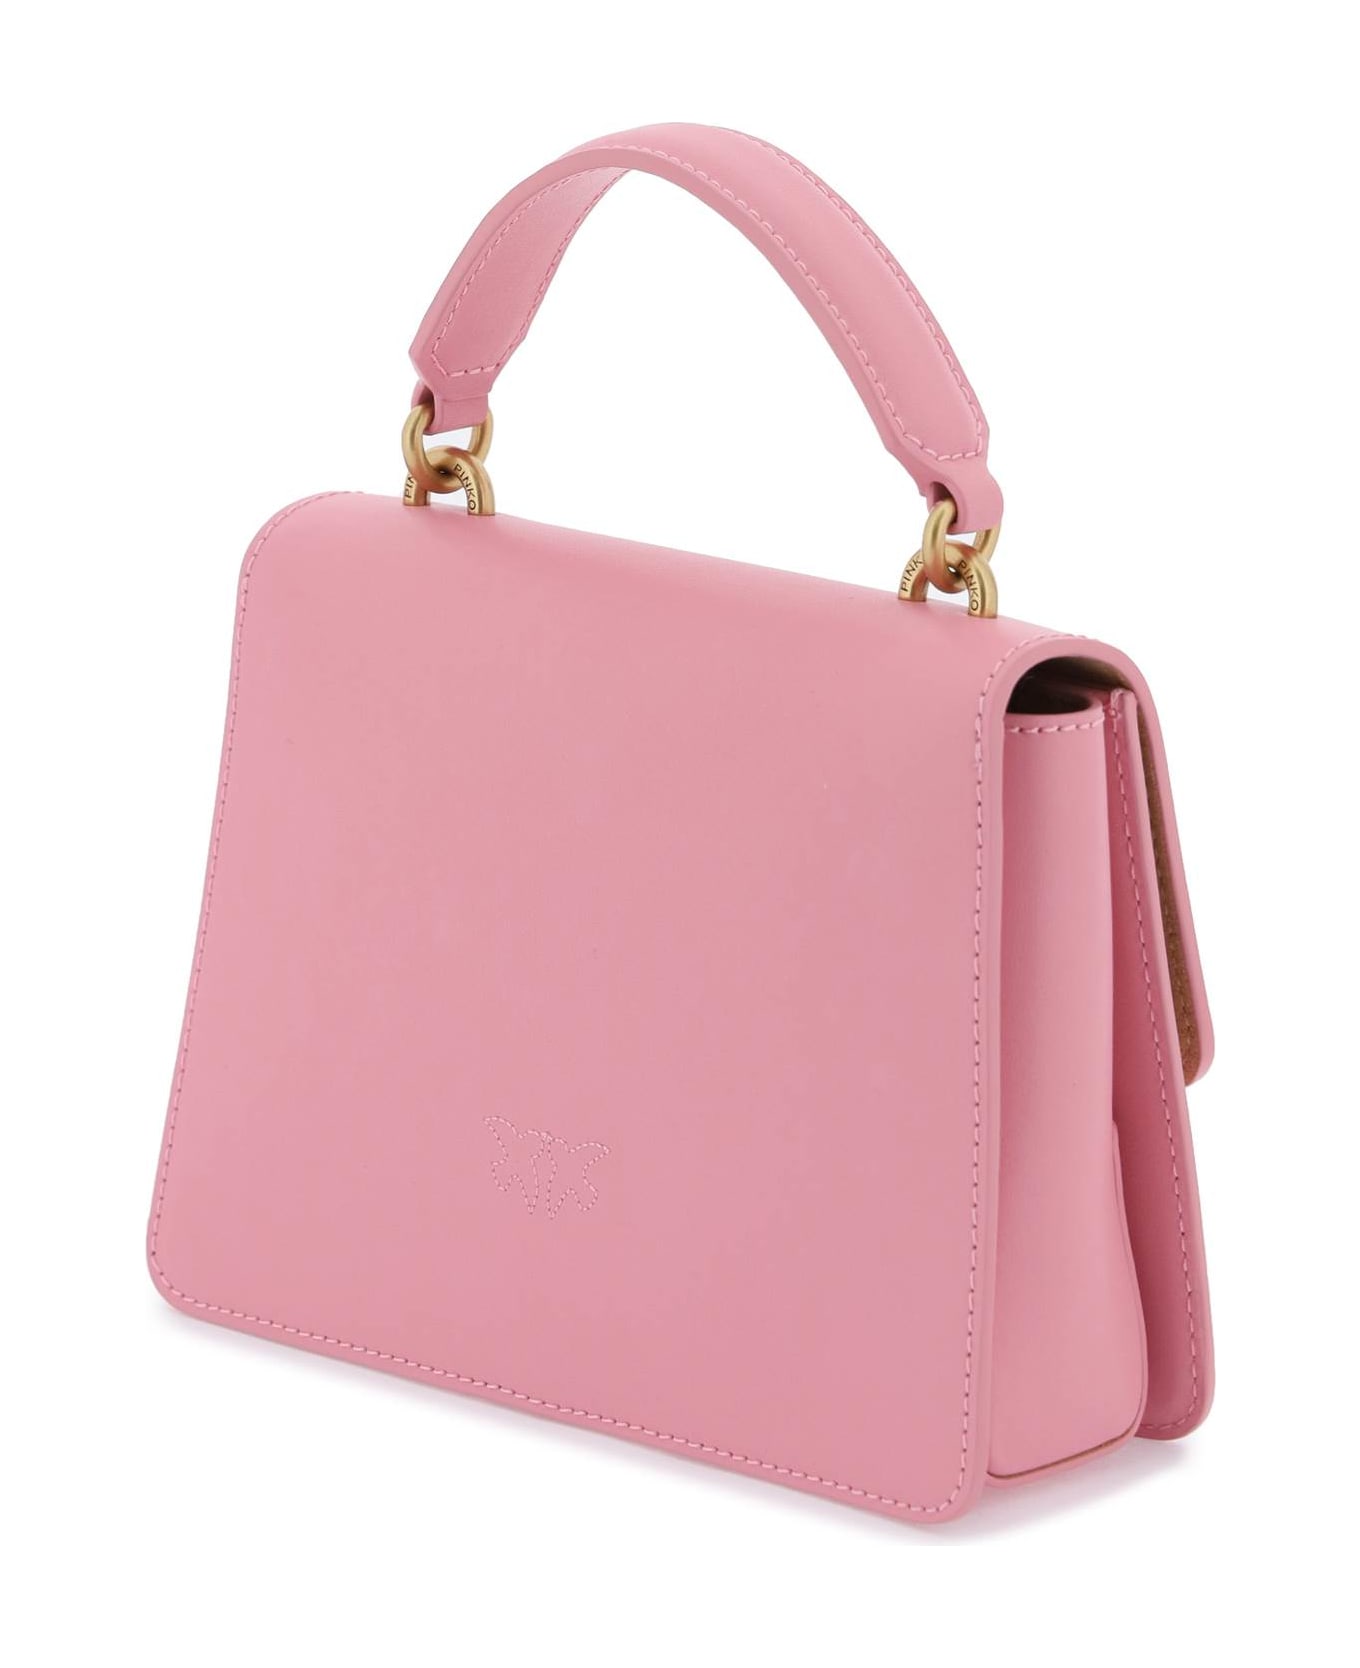 Pinko Love One Top Handle Mini Light Bag - ROSA MARINO ANTIQUE GOLD (Pink)